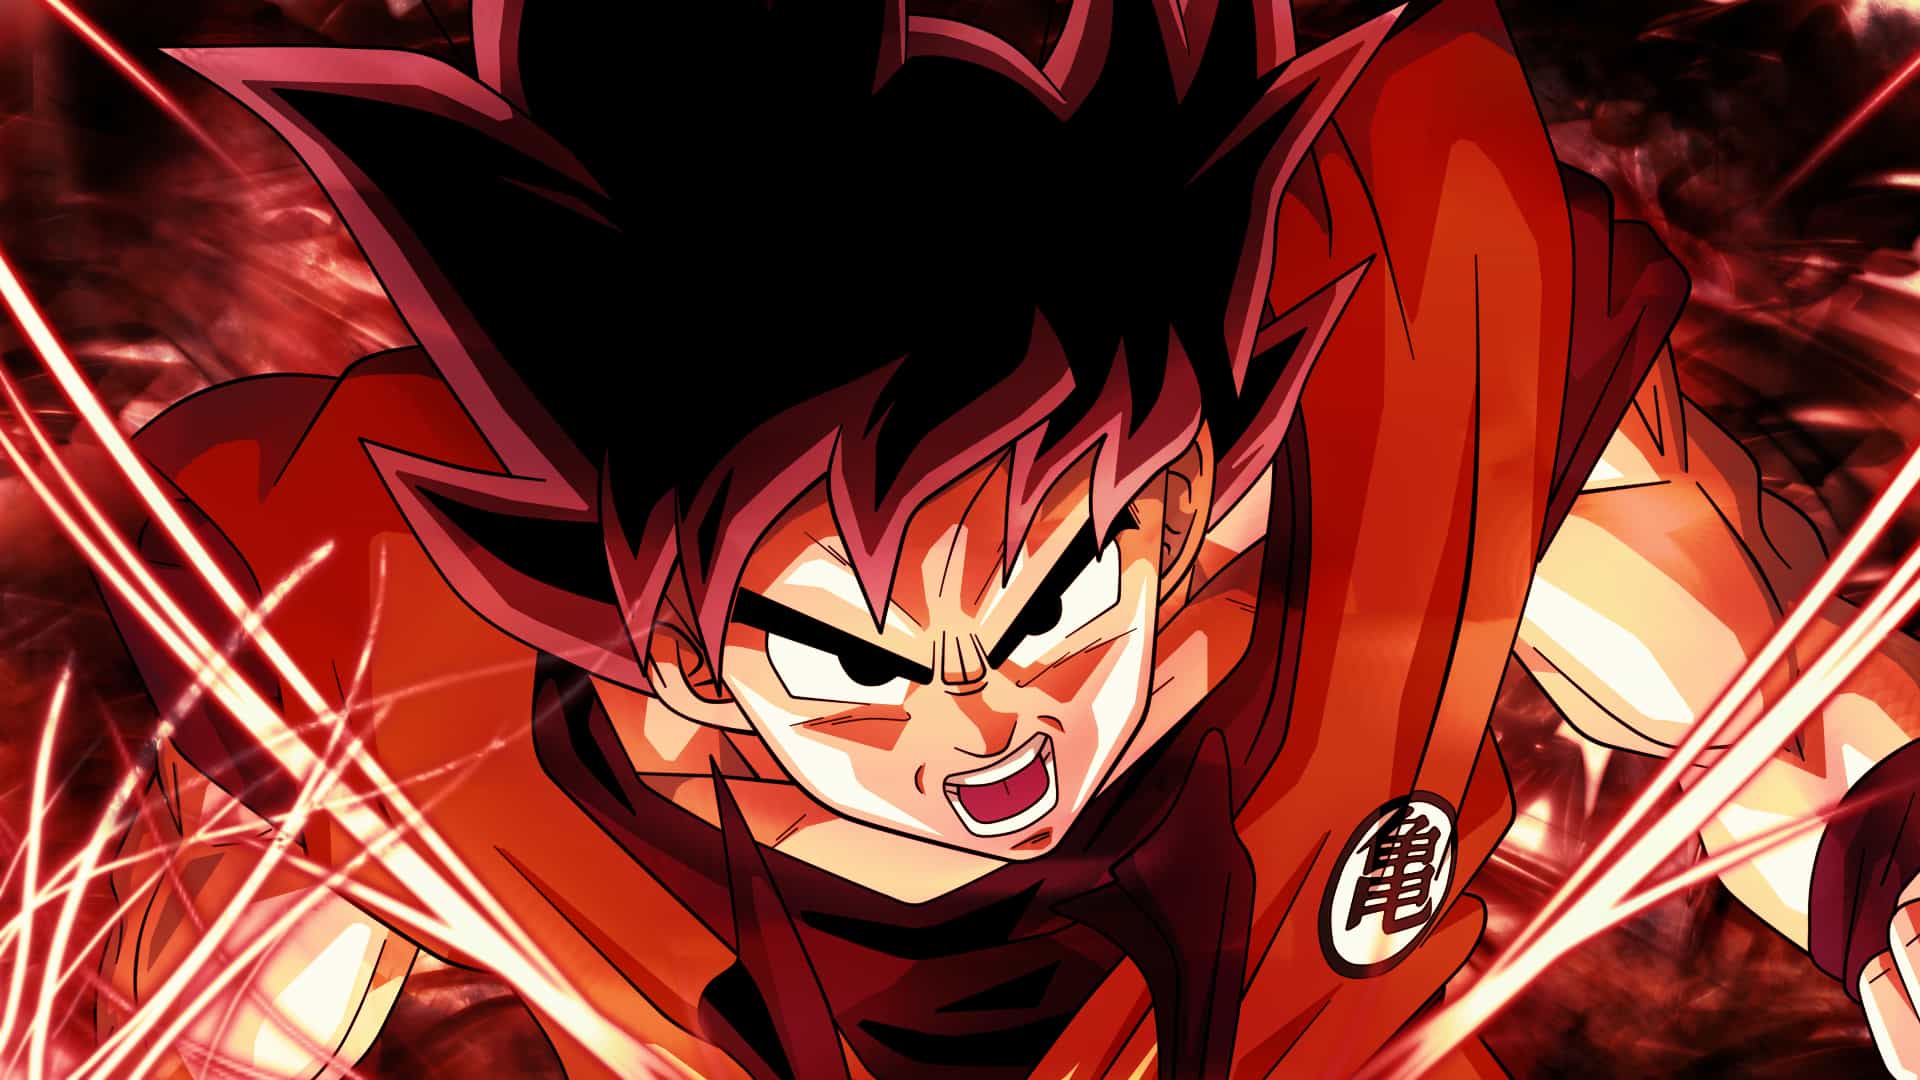 Goku Minimalist style 2020 Anime Wallpaper 4k Ultra HD ID:6162